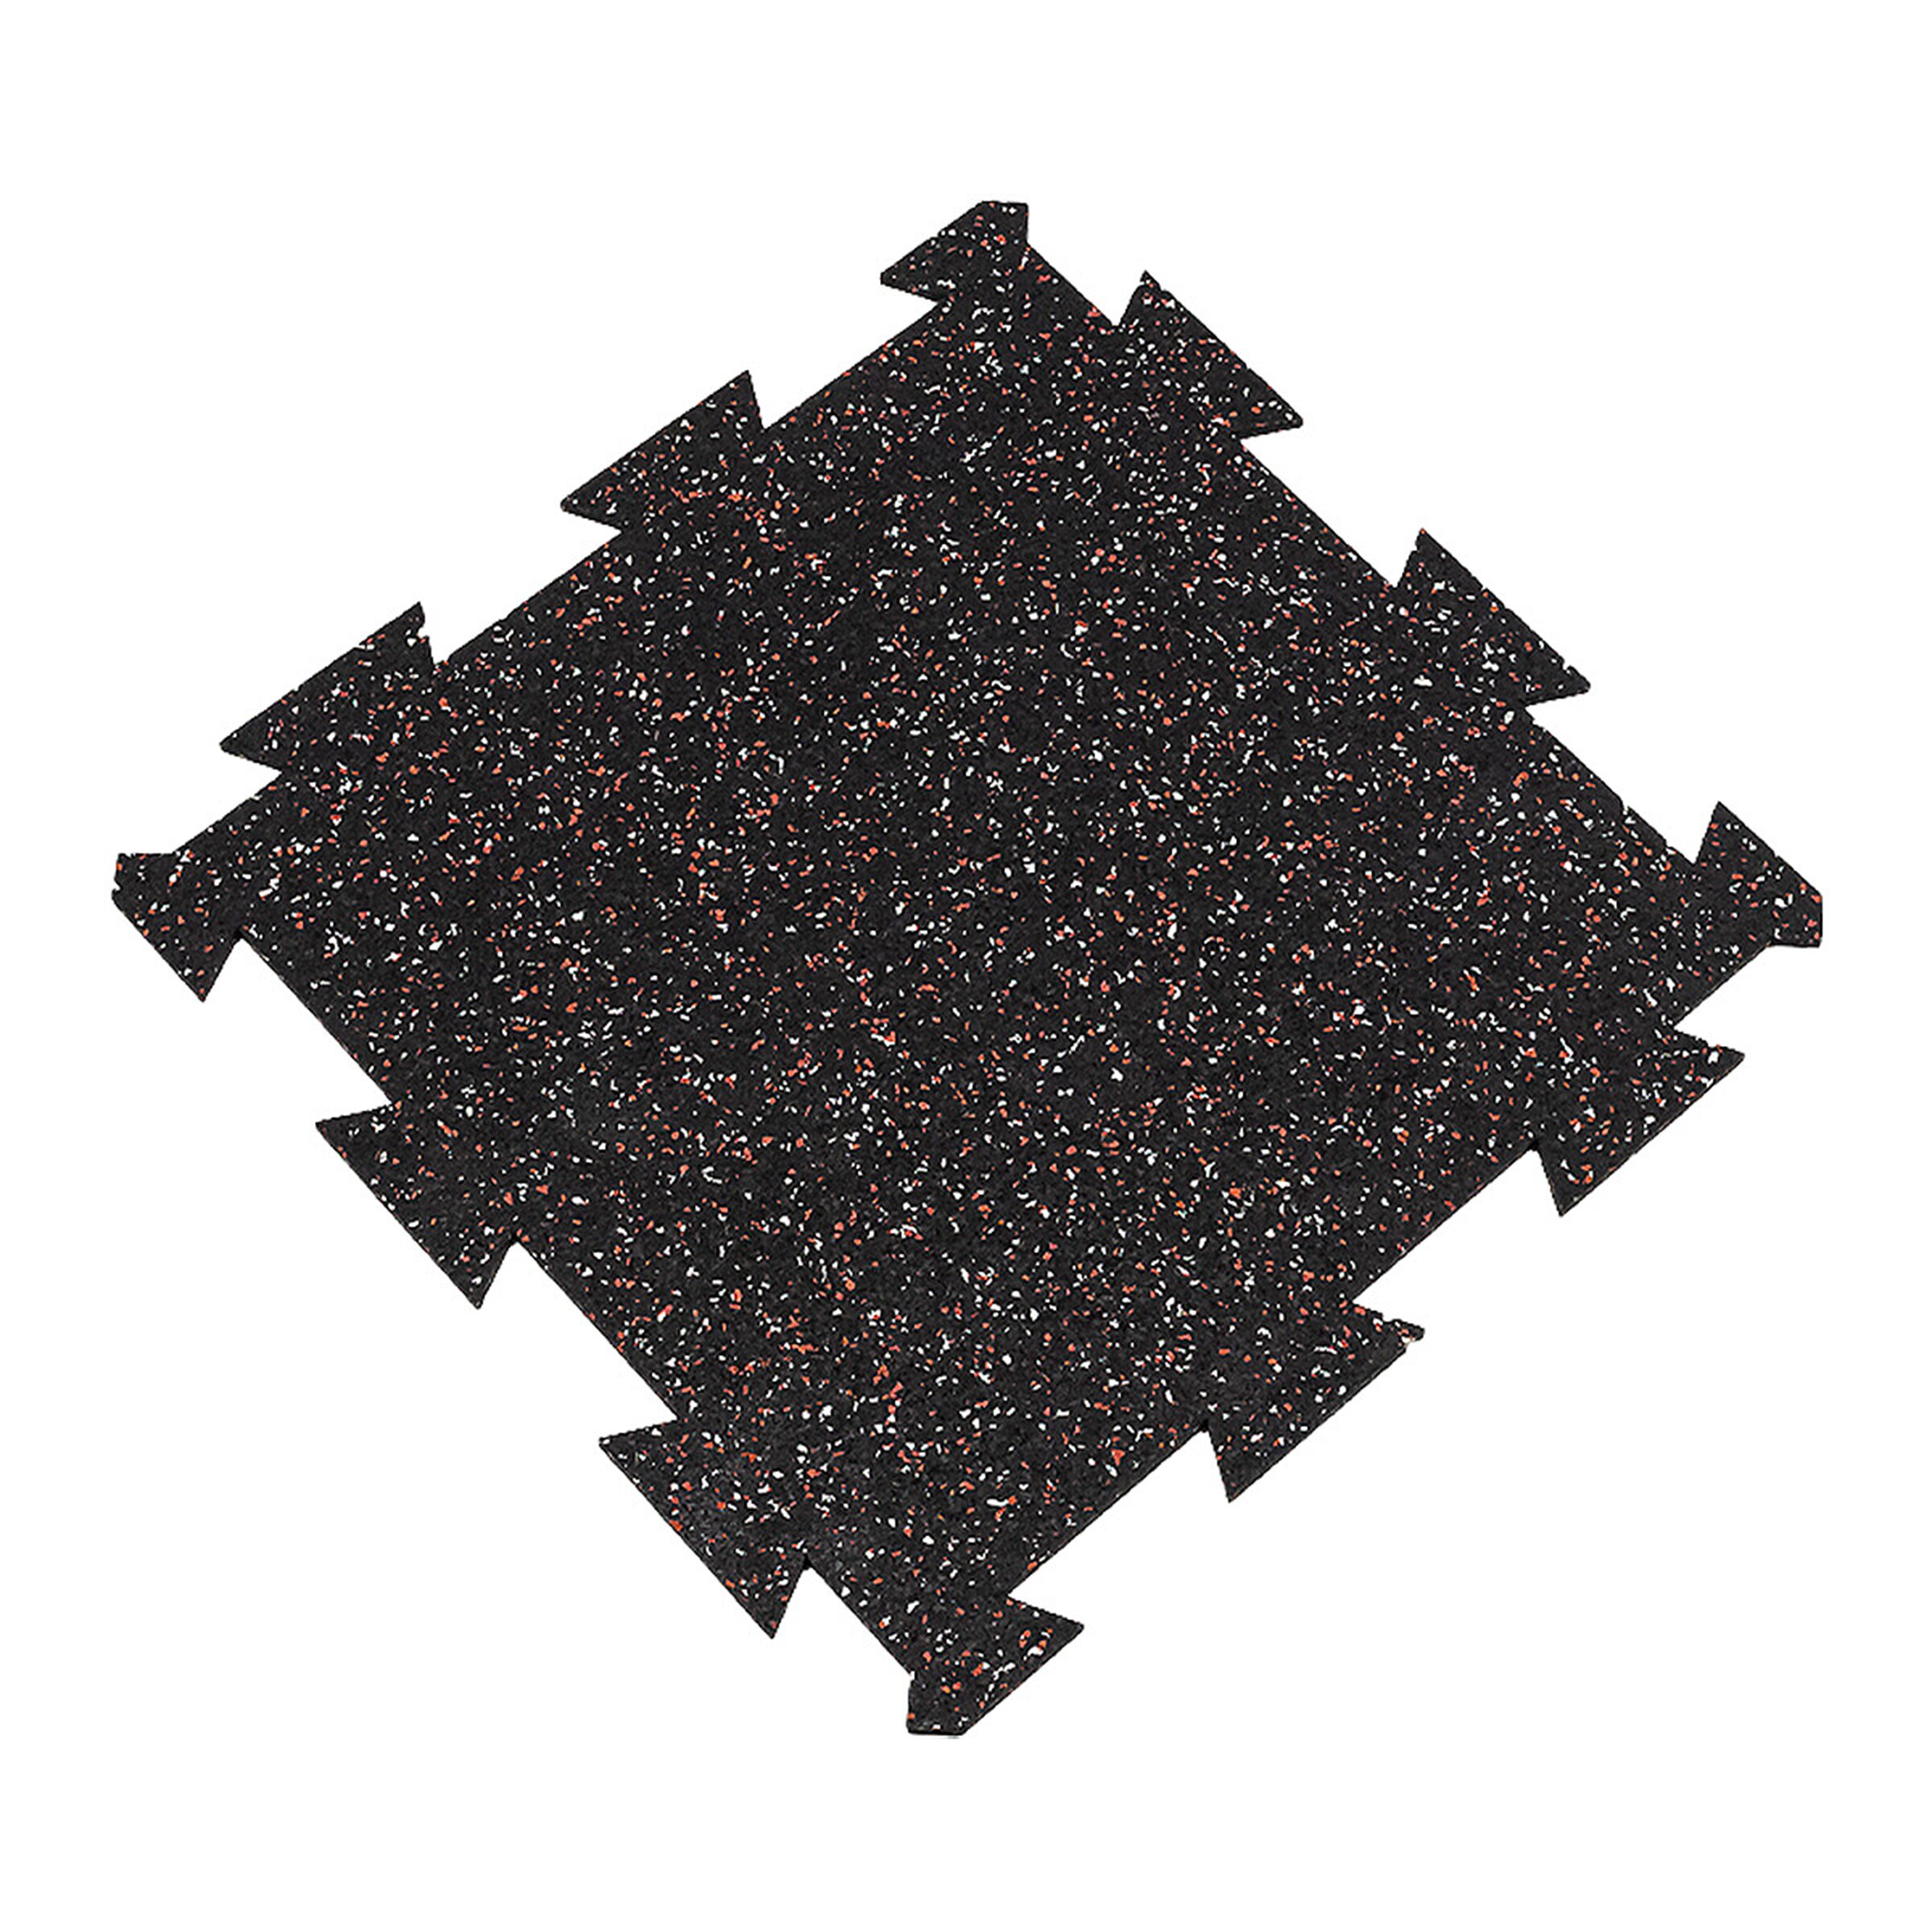 Černo-bílo-červená gumová modulová puzzle dlaždice (střed) FLOMA FitFlo SF1050 - délka 50 cm, šířka 50 cm, výška 0,8 cm